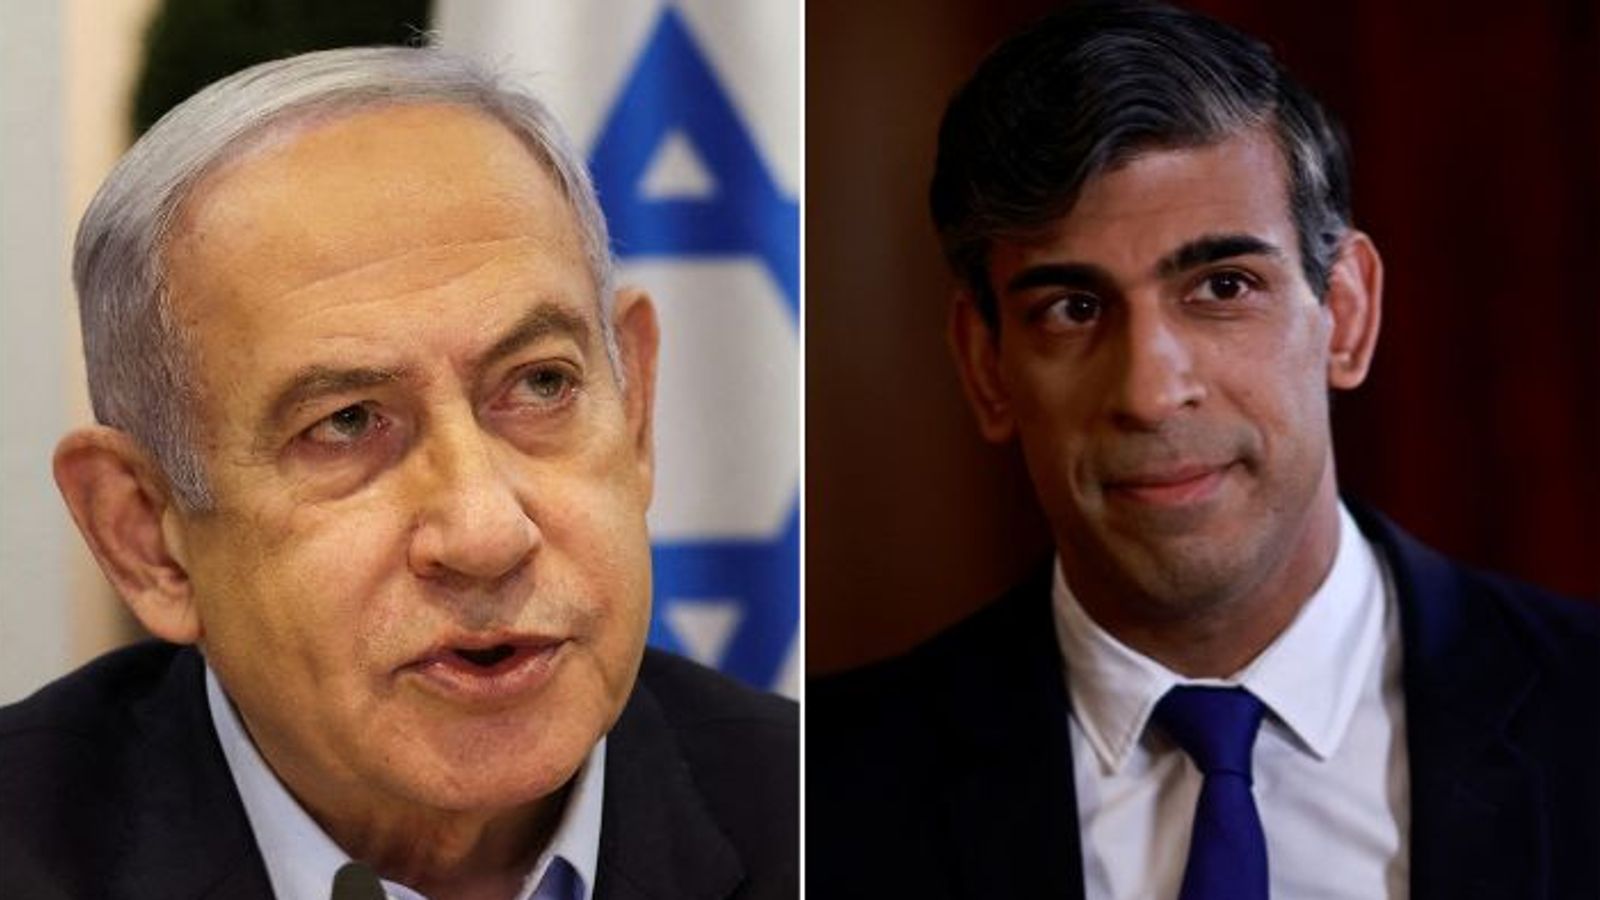 Rishi Sunak tells Benjamin Netanyahu now is 'moment for calm heads' in wake of Iran attack